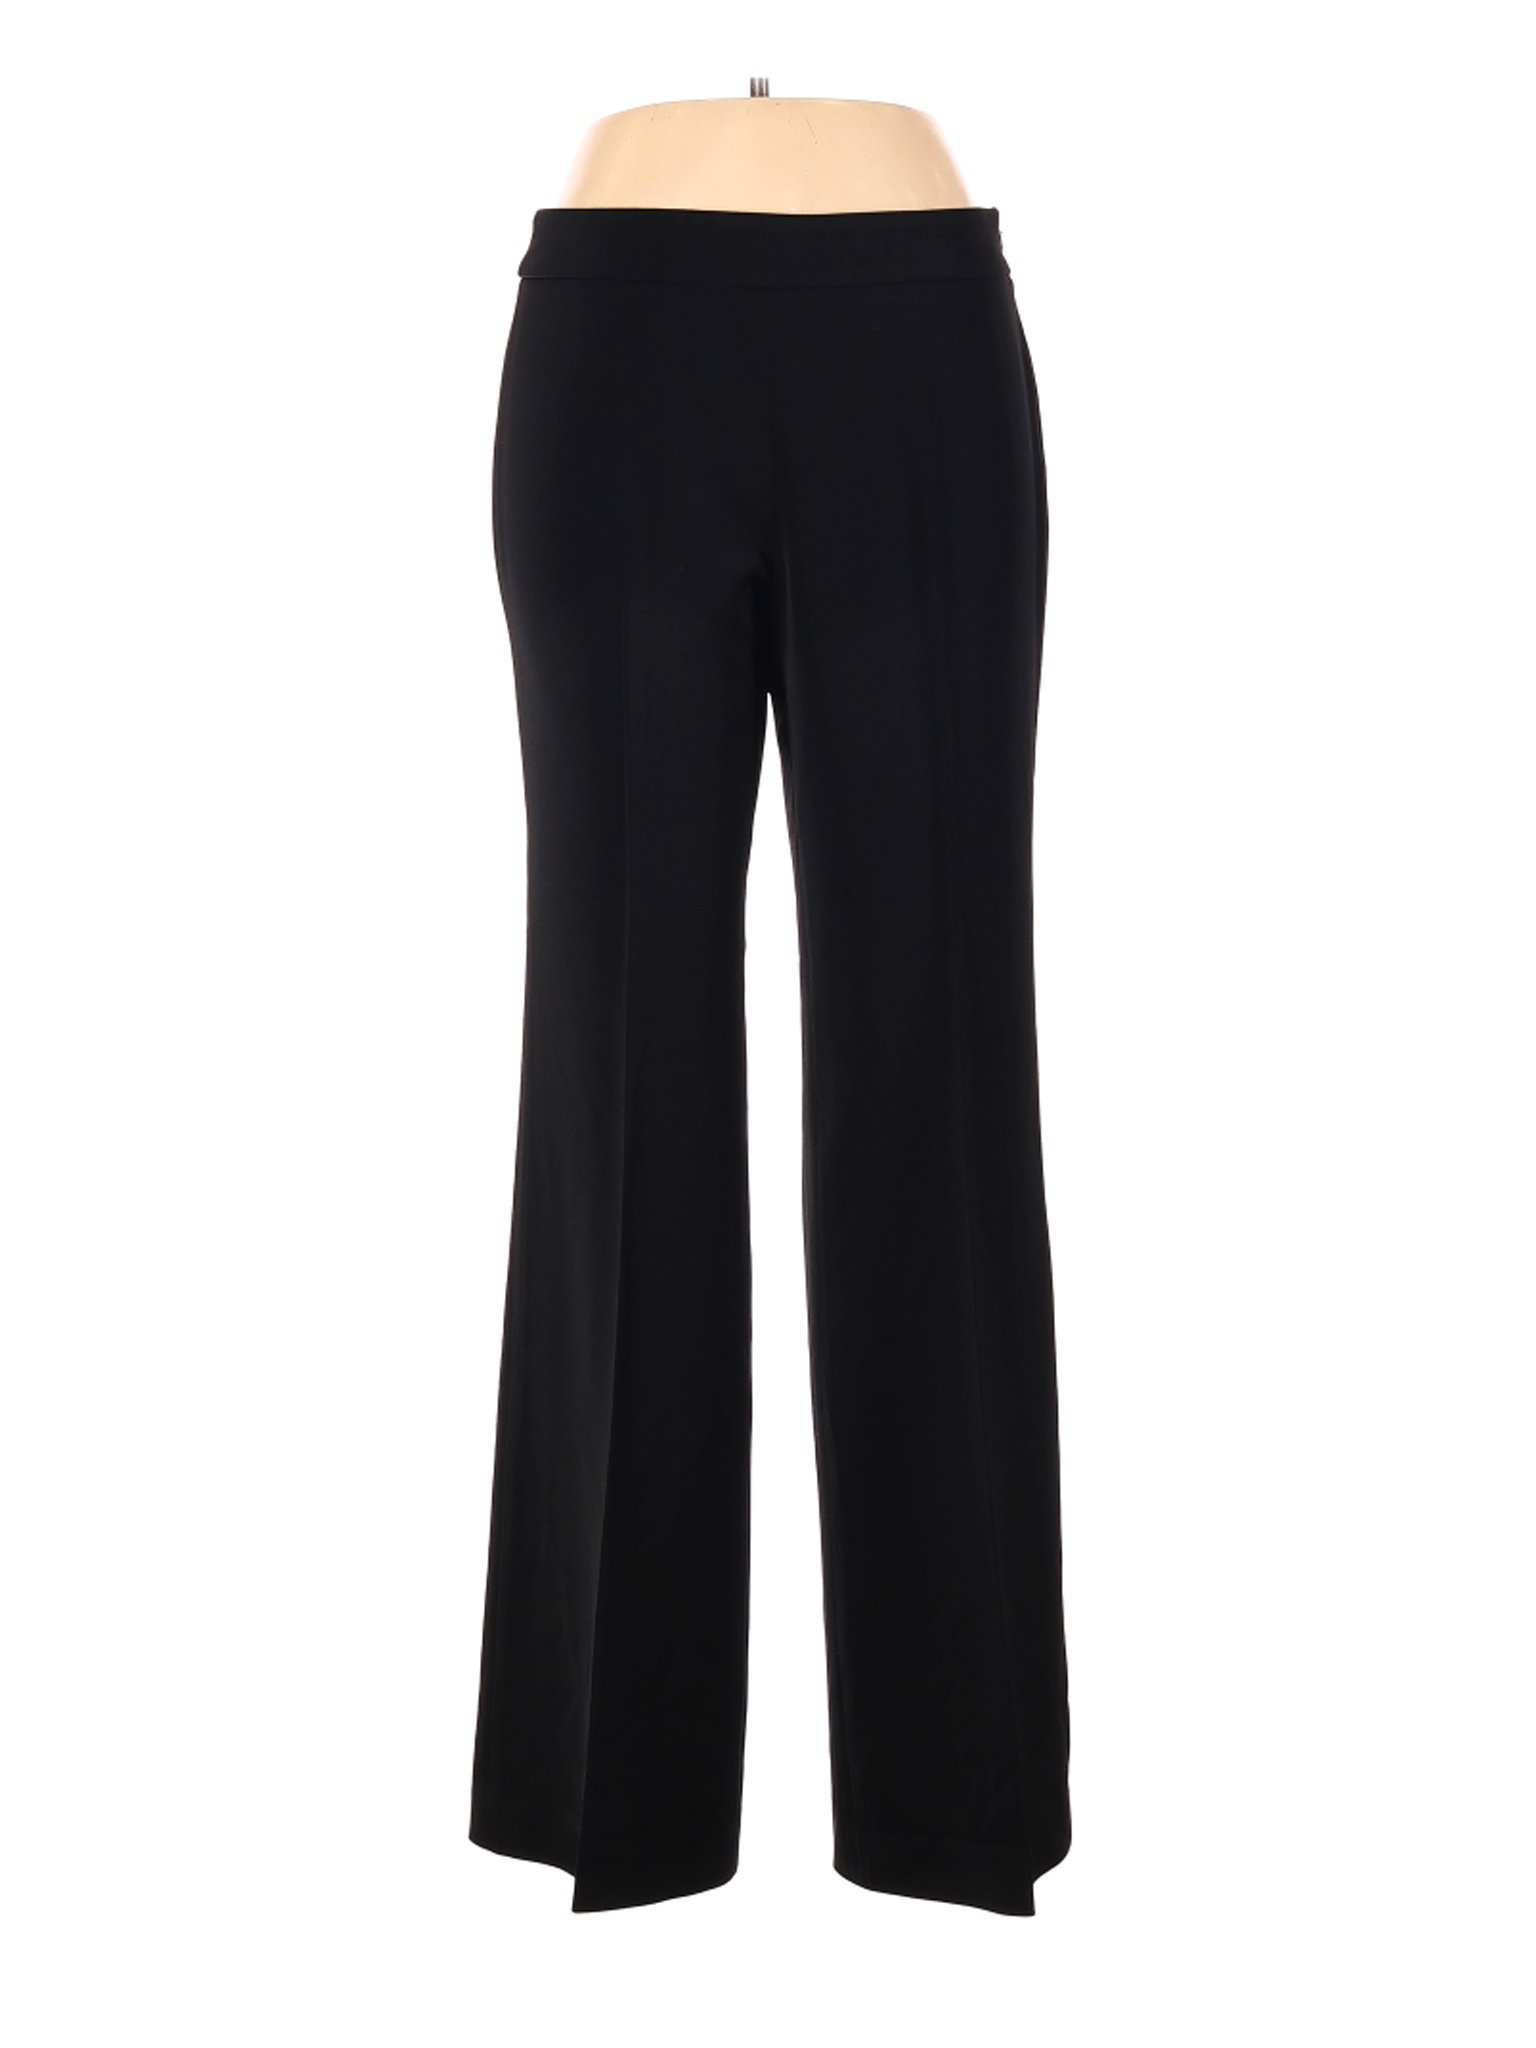 White House Black Market Women Black Dress Pants 10 | eBay